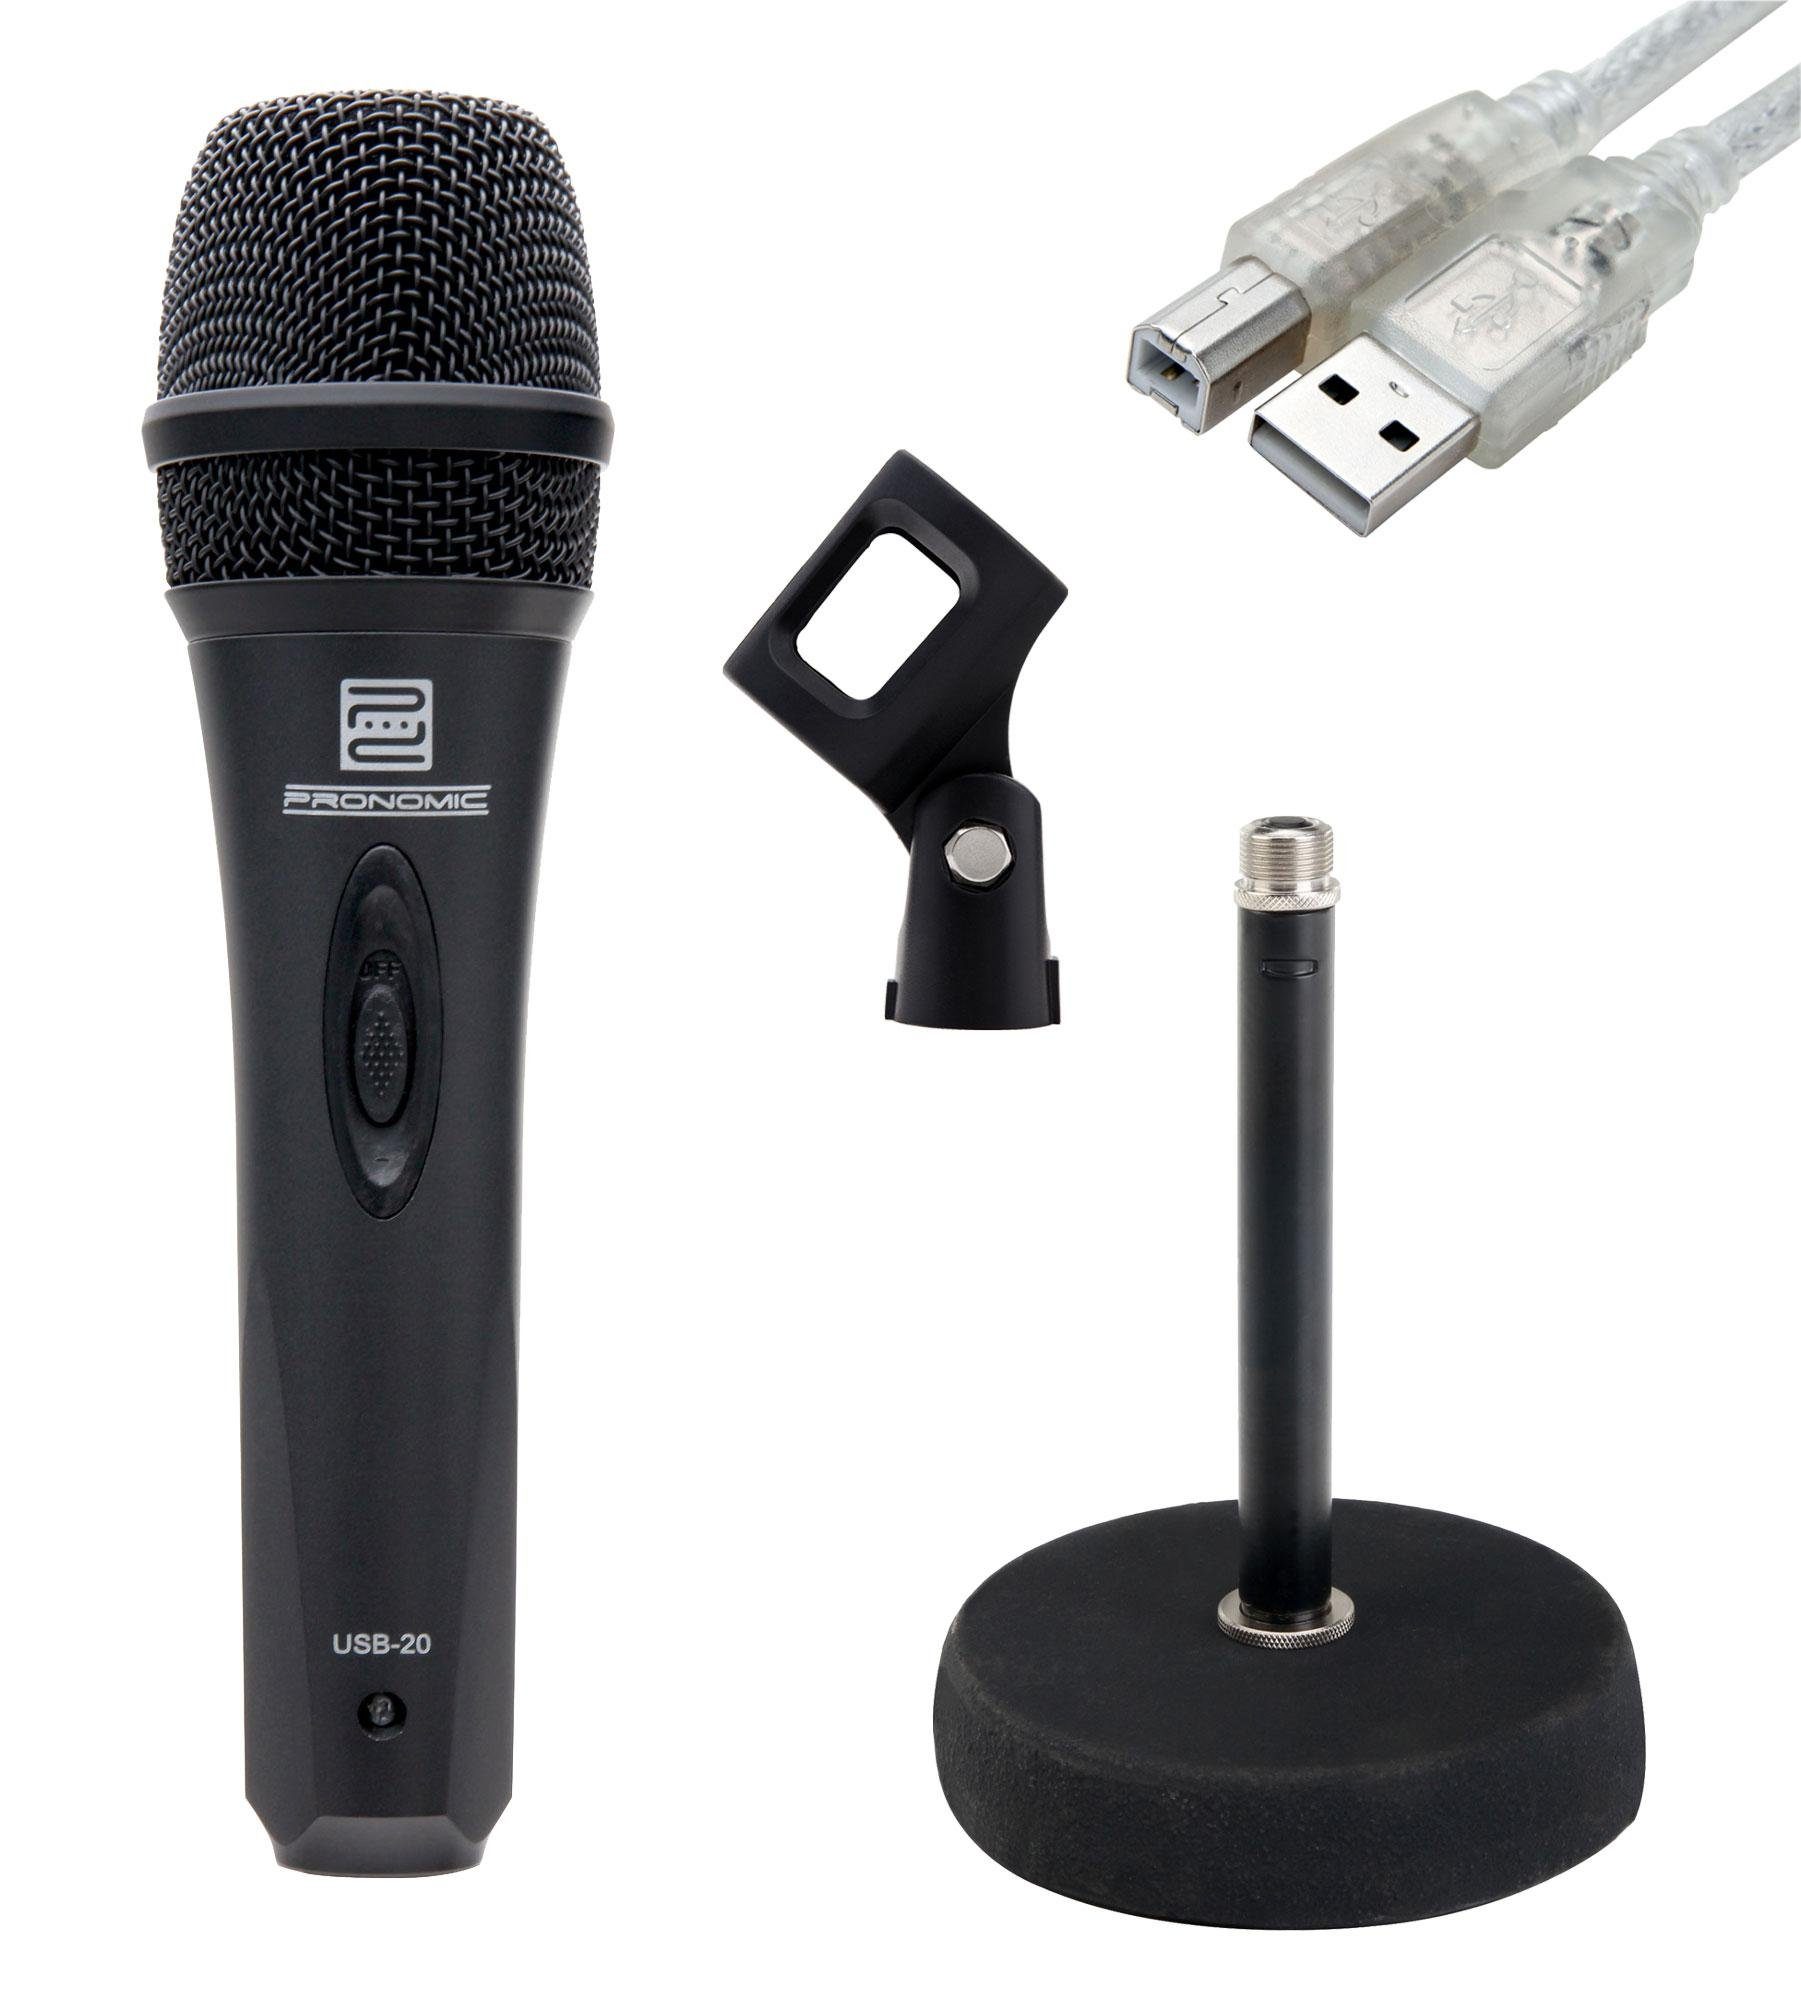 Pronomic Mikrofon »USB-20 USB Mikrofon SET inkl. Pronomic MST-10 BK  Tisch-Mikrofonstativ (dynamisches Gesangs-/Sprachmikrofon,  Ein-/Aus-Schalter, USB Typ A, inkl. Halterung, USB Kabel, Etui, Kleinstativ  rund)«, Ausgewogener, präsenter Klang online ...